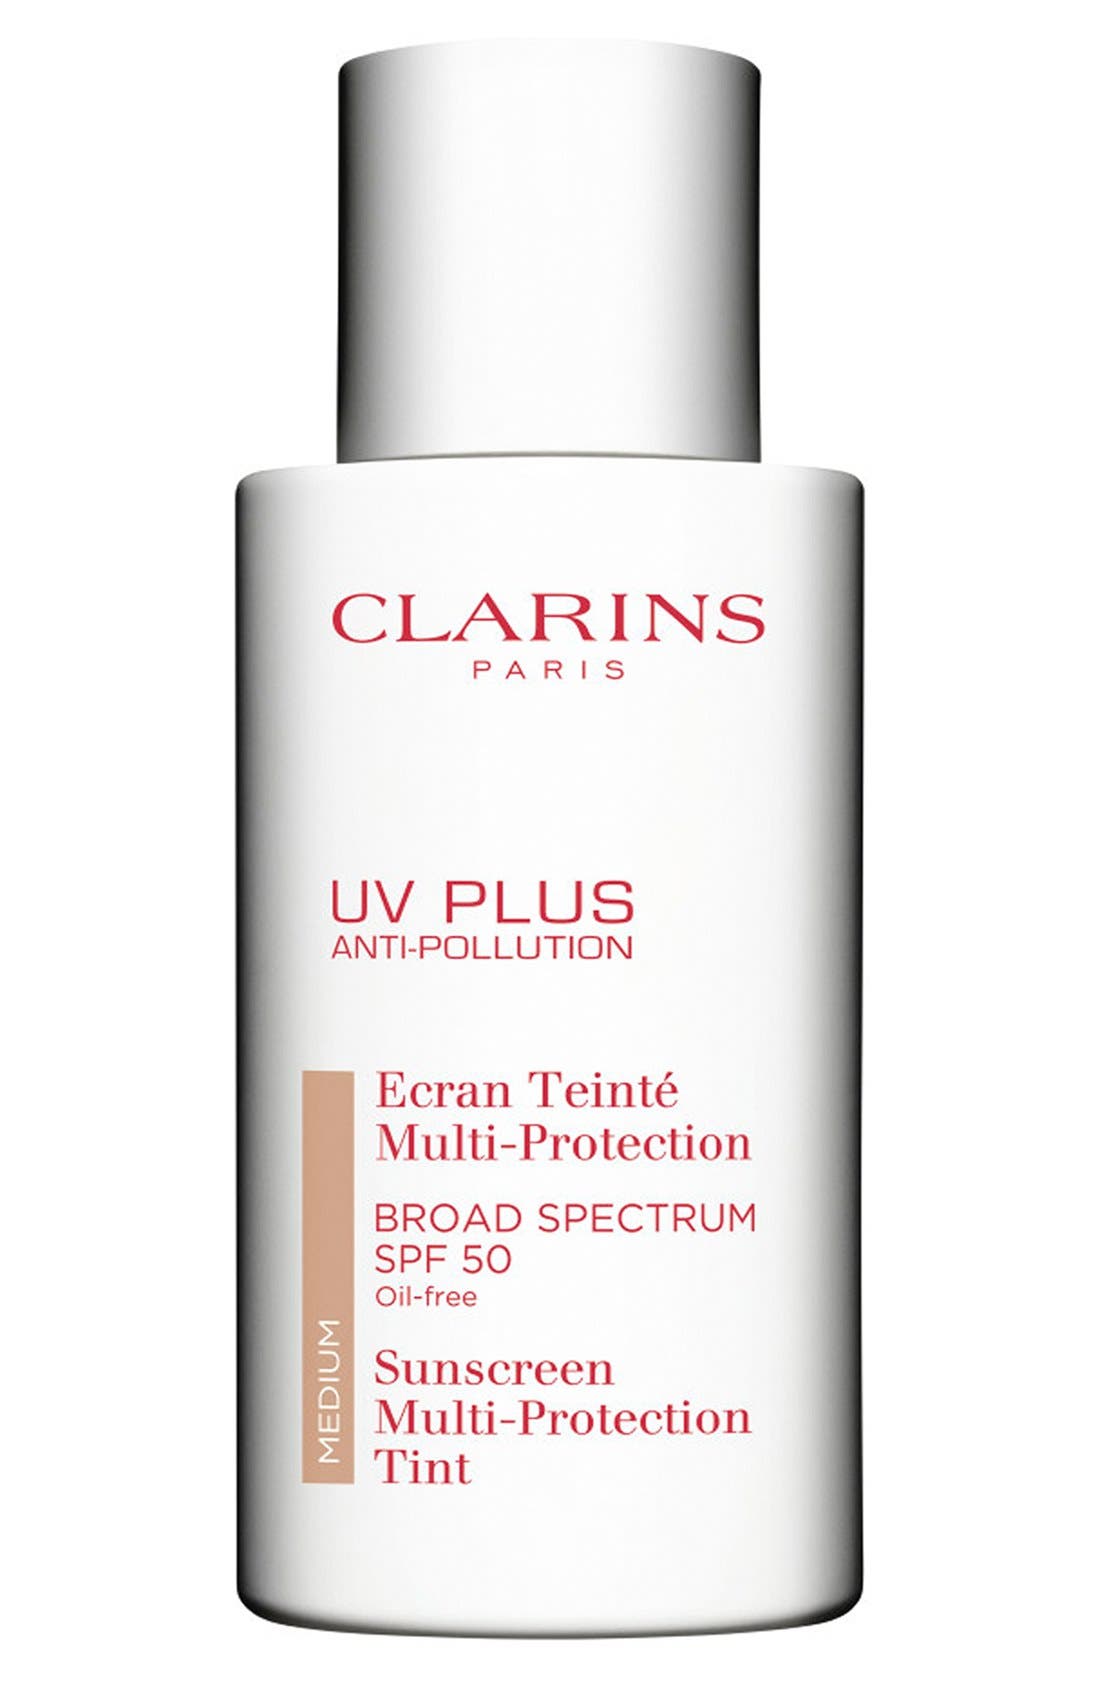 Clarins UV PLUS Anti-Pollution Broad Spectrum SPF 50 Tinted Sunscreen Multi-Protection - Medium